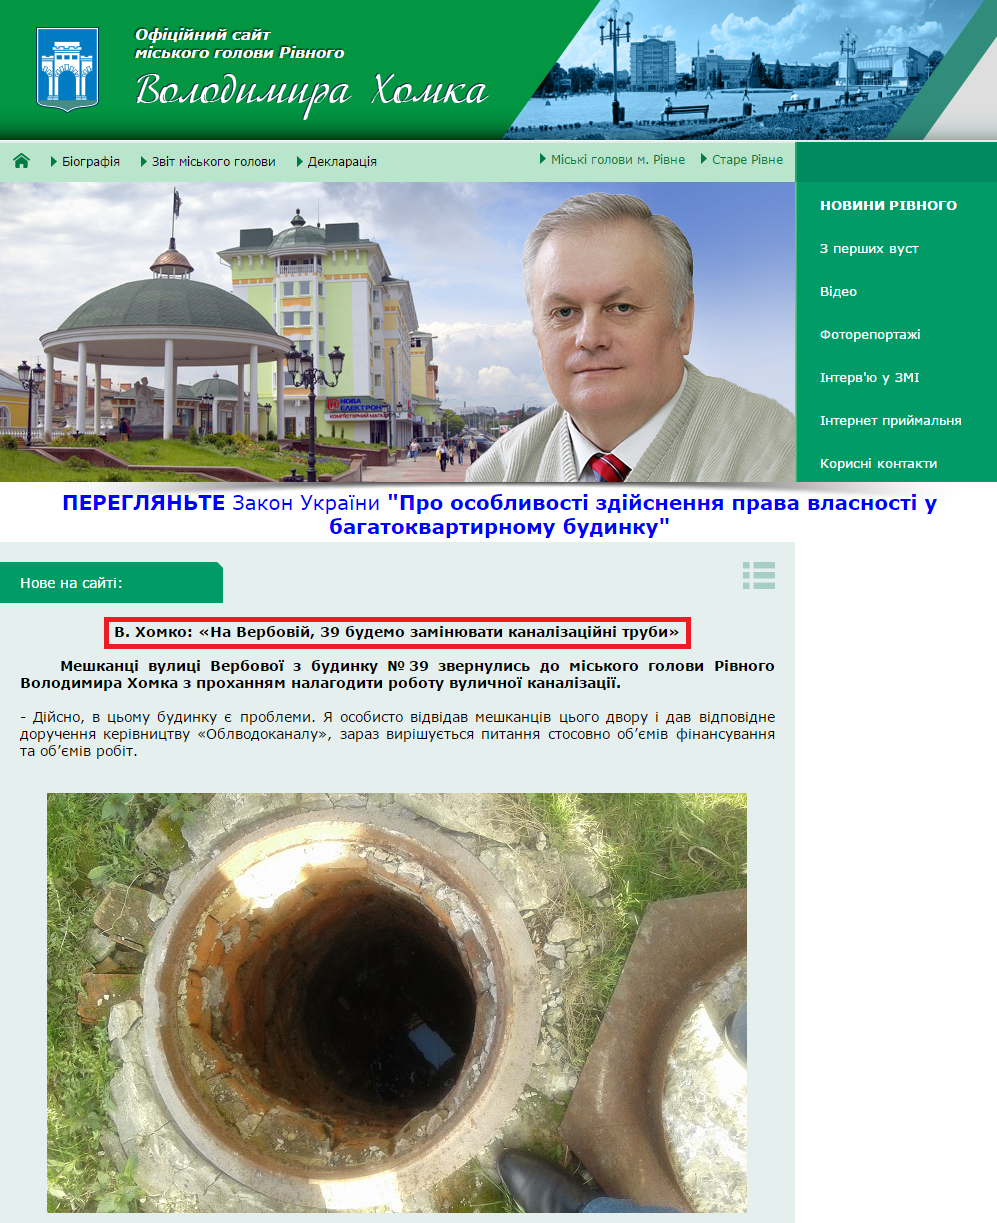 http://www.khomko.rv.ua/ContentPages/Public/Mayor/home.aspx?fdid=18666